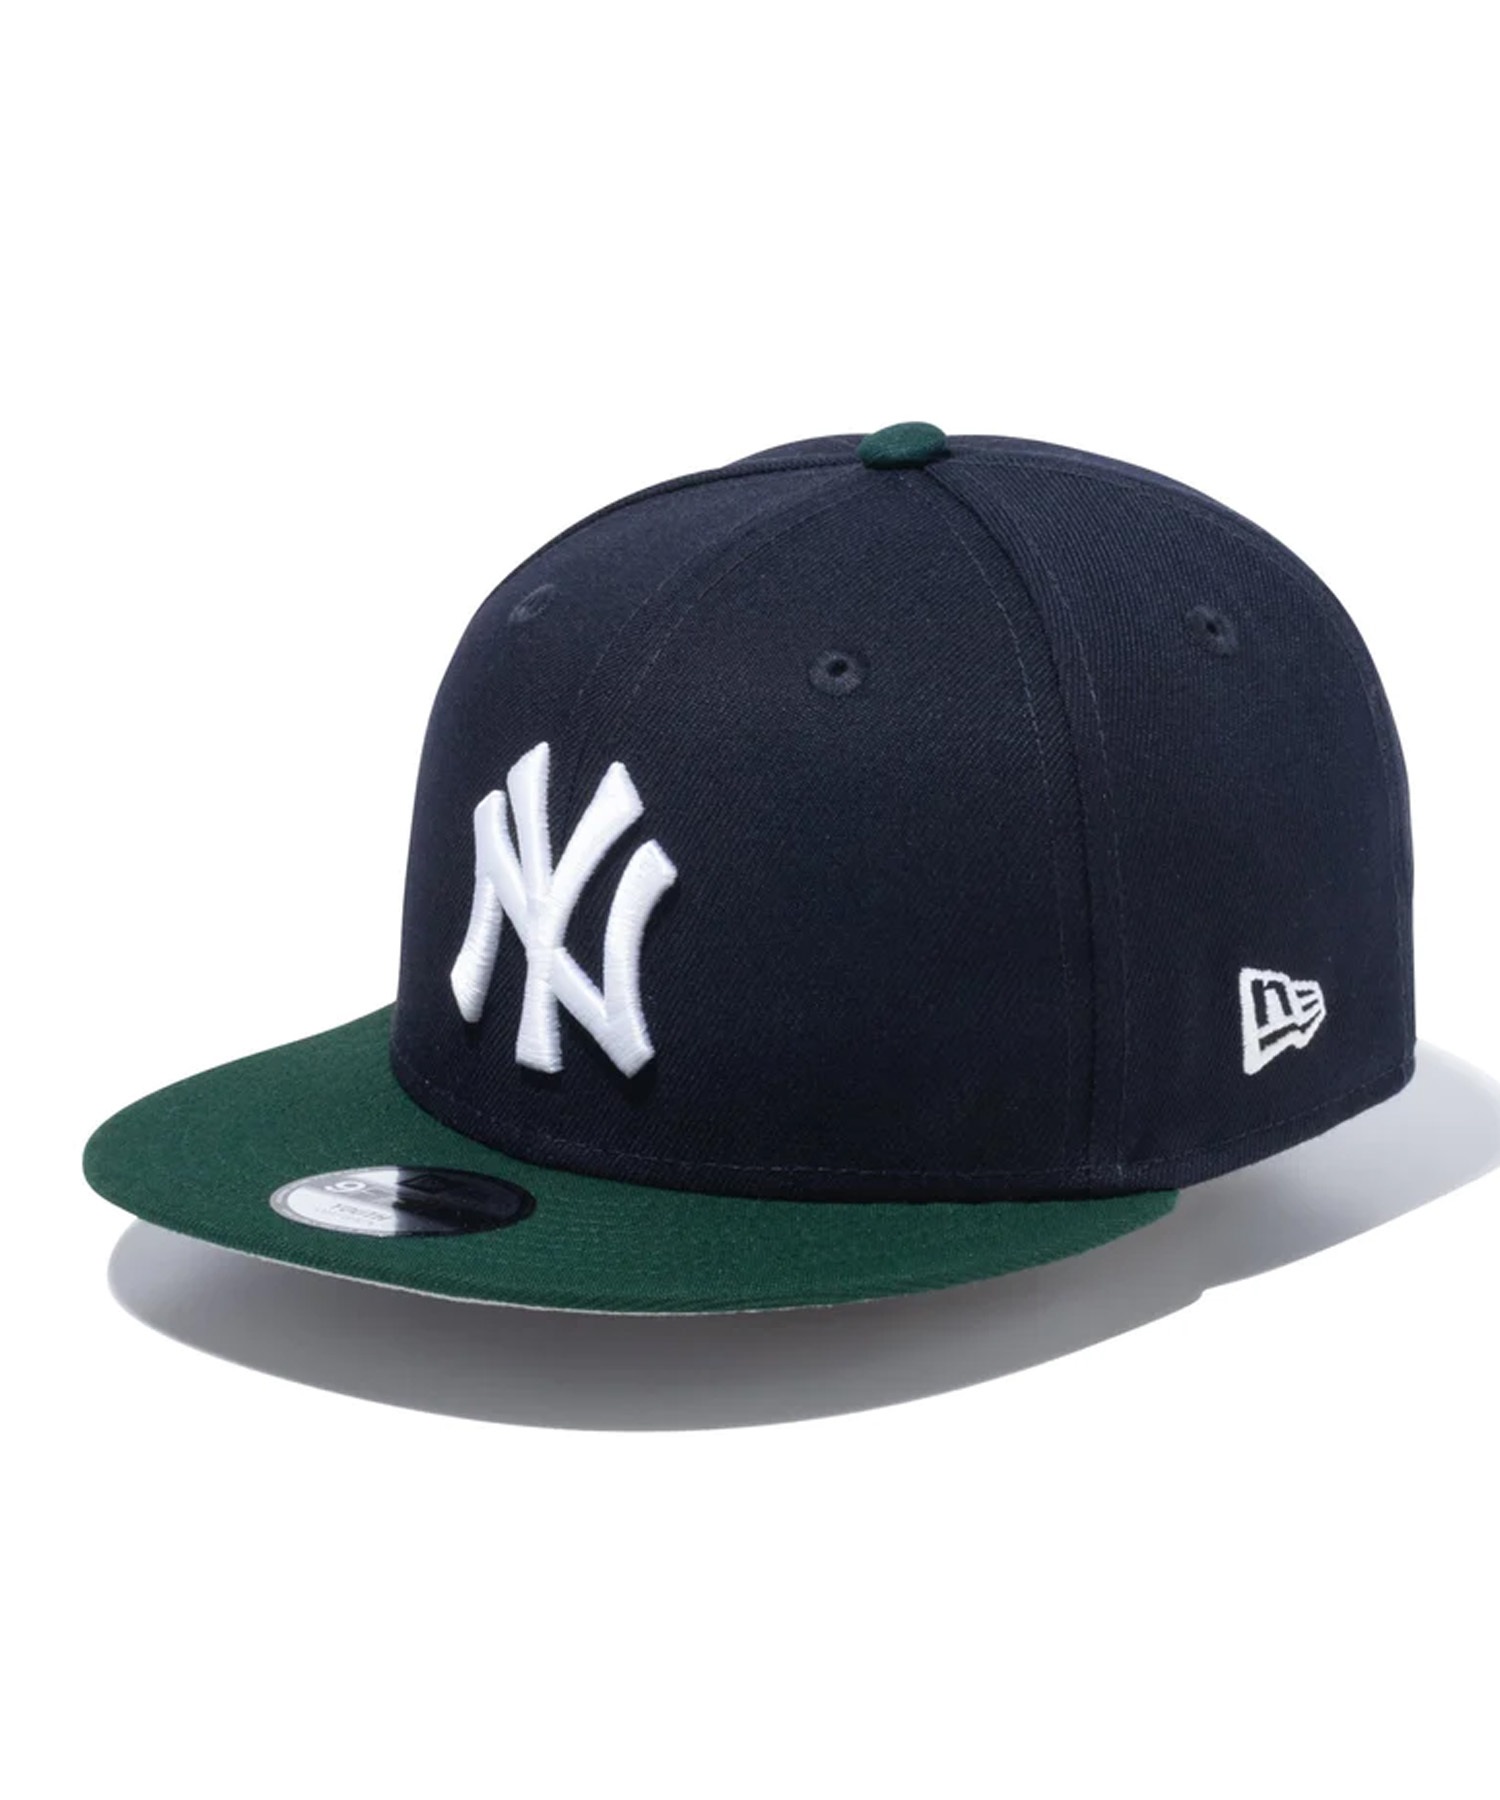 NEW ERA ニューエラ Youth 9FIFTY Powered by GORO NAKATSUGAWA ニューヨーク・ヤンキース キッズ キャップ 帽子 14124628(ONECOLOR-YTH)